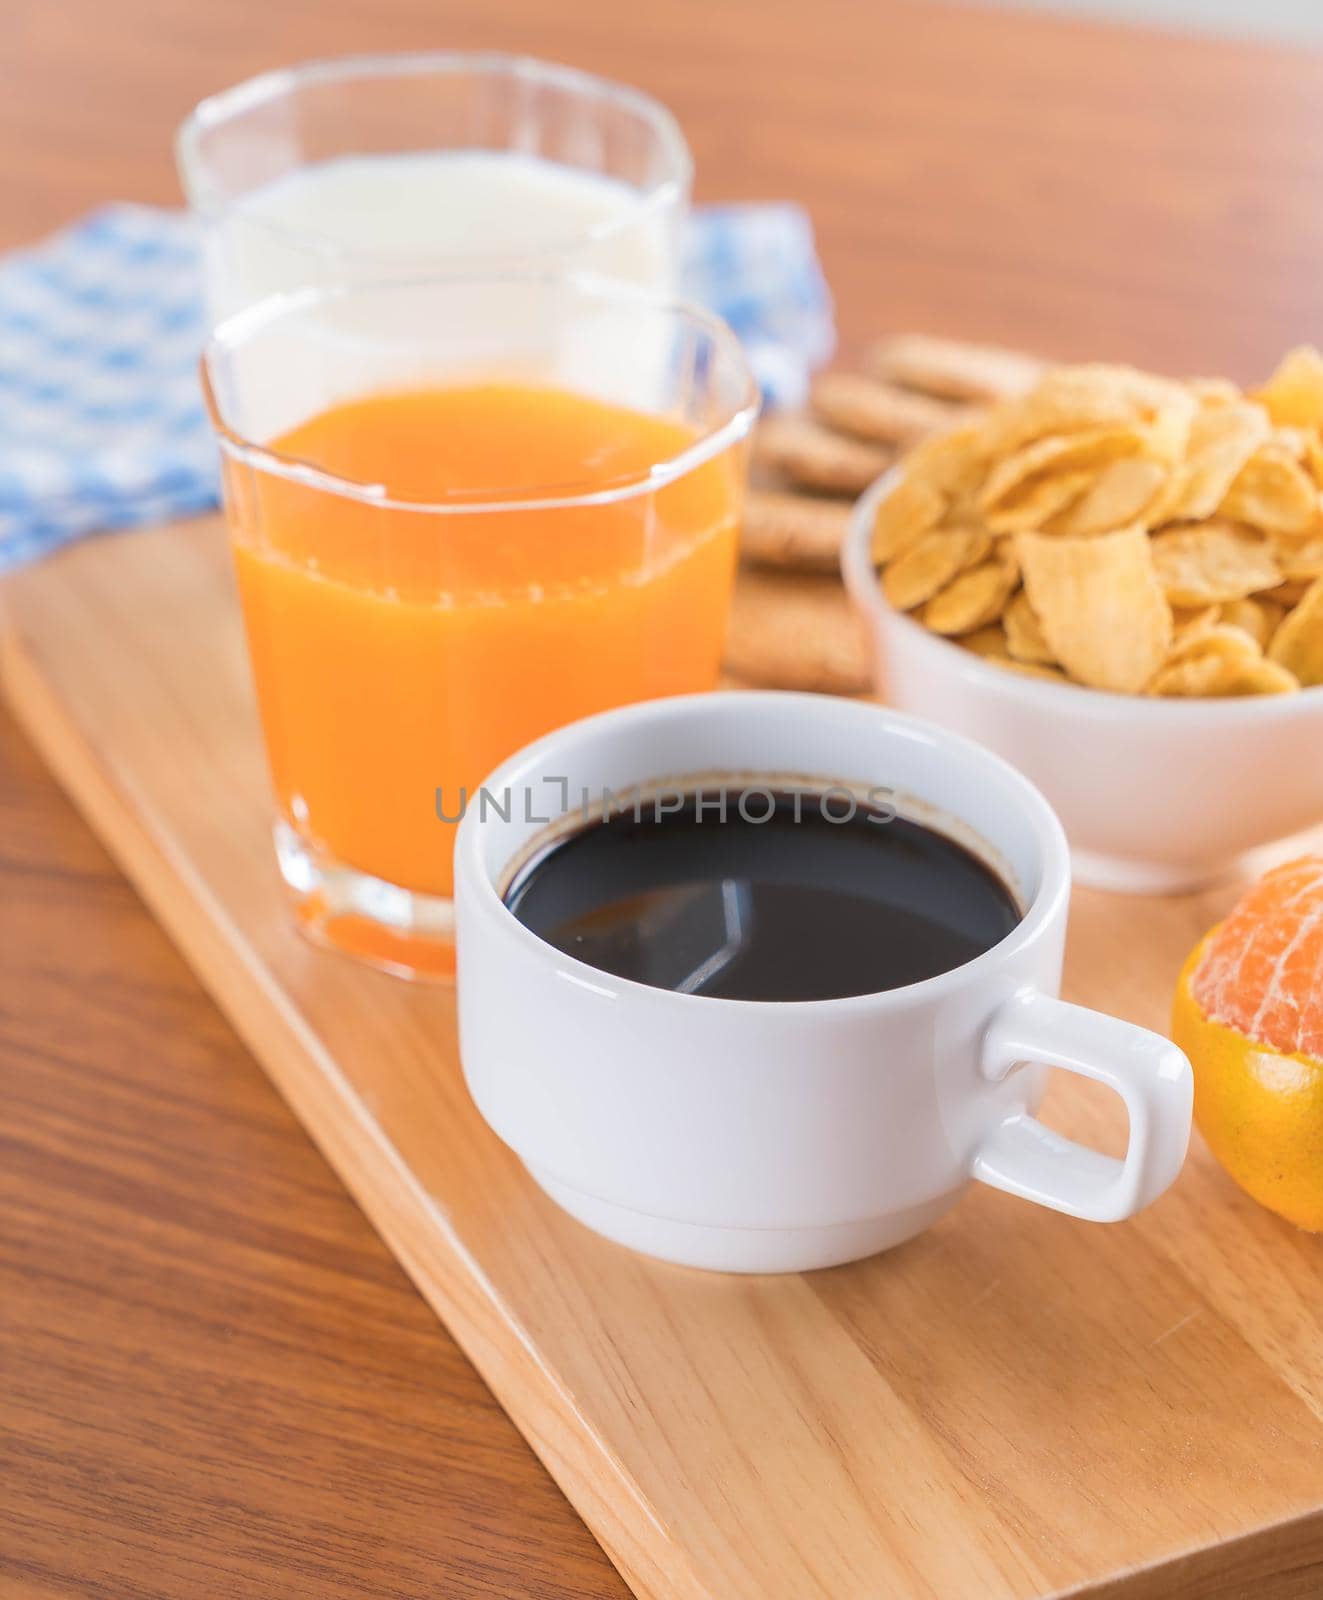 Table Breakfast - Continental Breakfast, fruit, cereals and orange juice